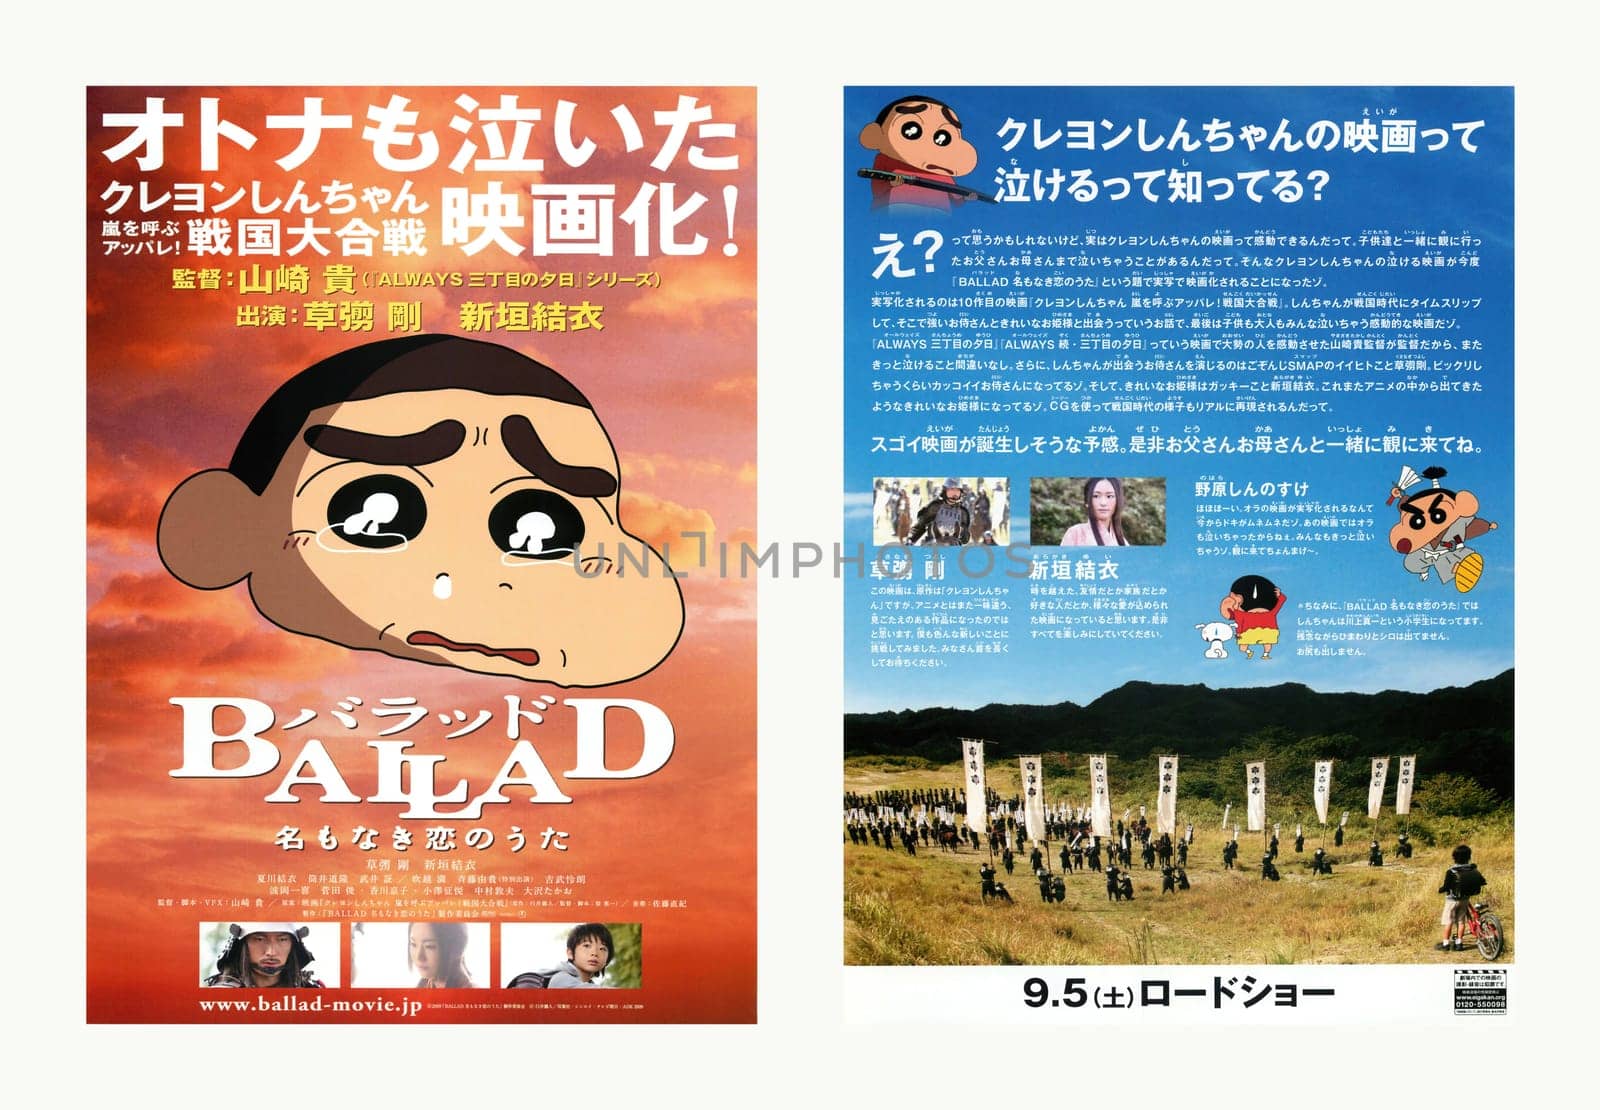 1st teaser visual of movie "BALLAD" by Takashi Yamazaki with anime character Crayon Shin-chan. by kuremo